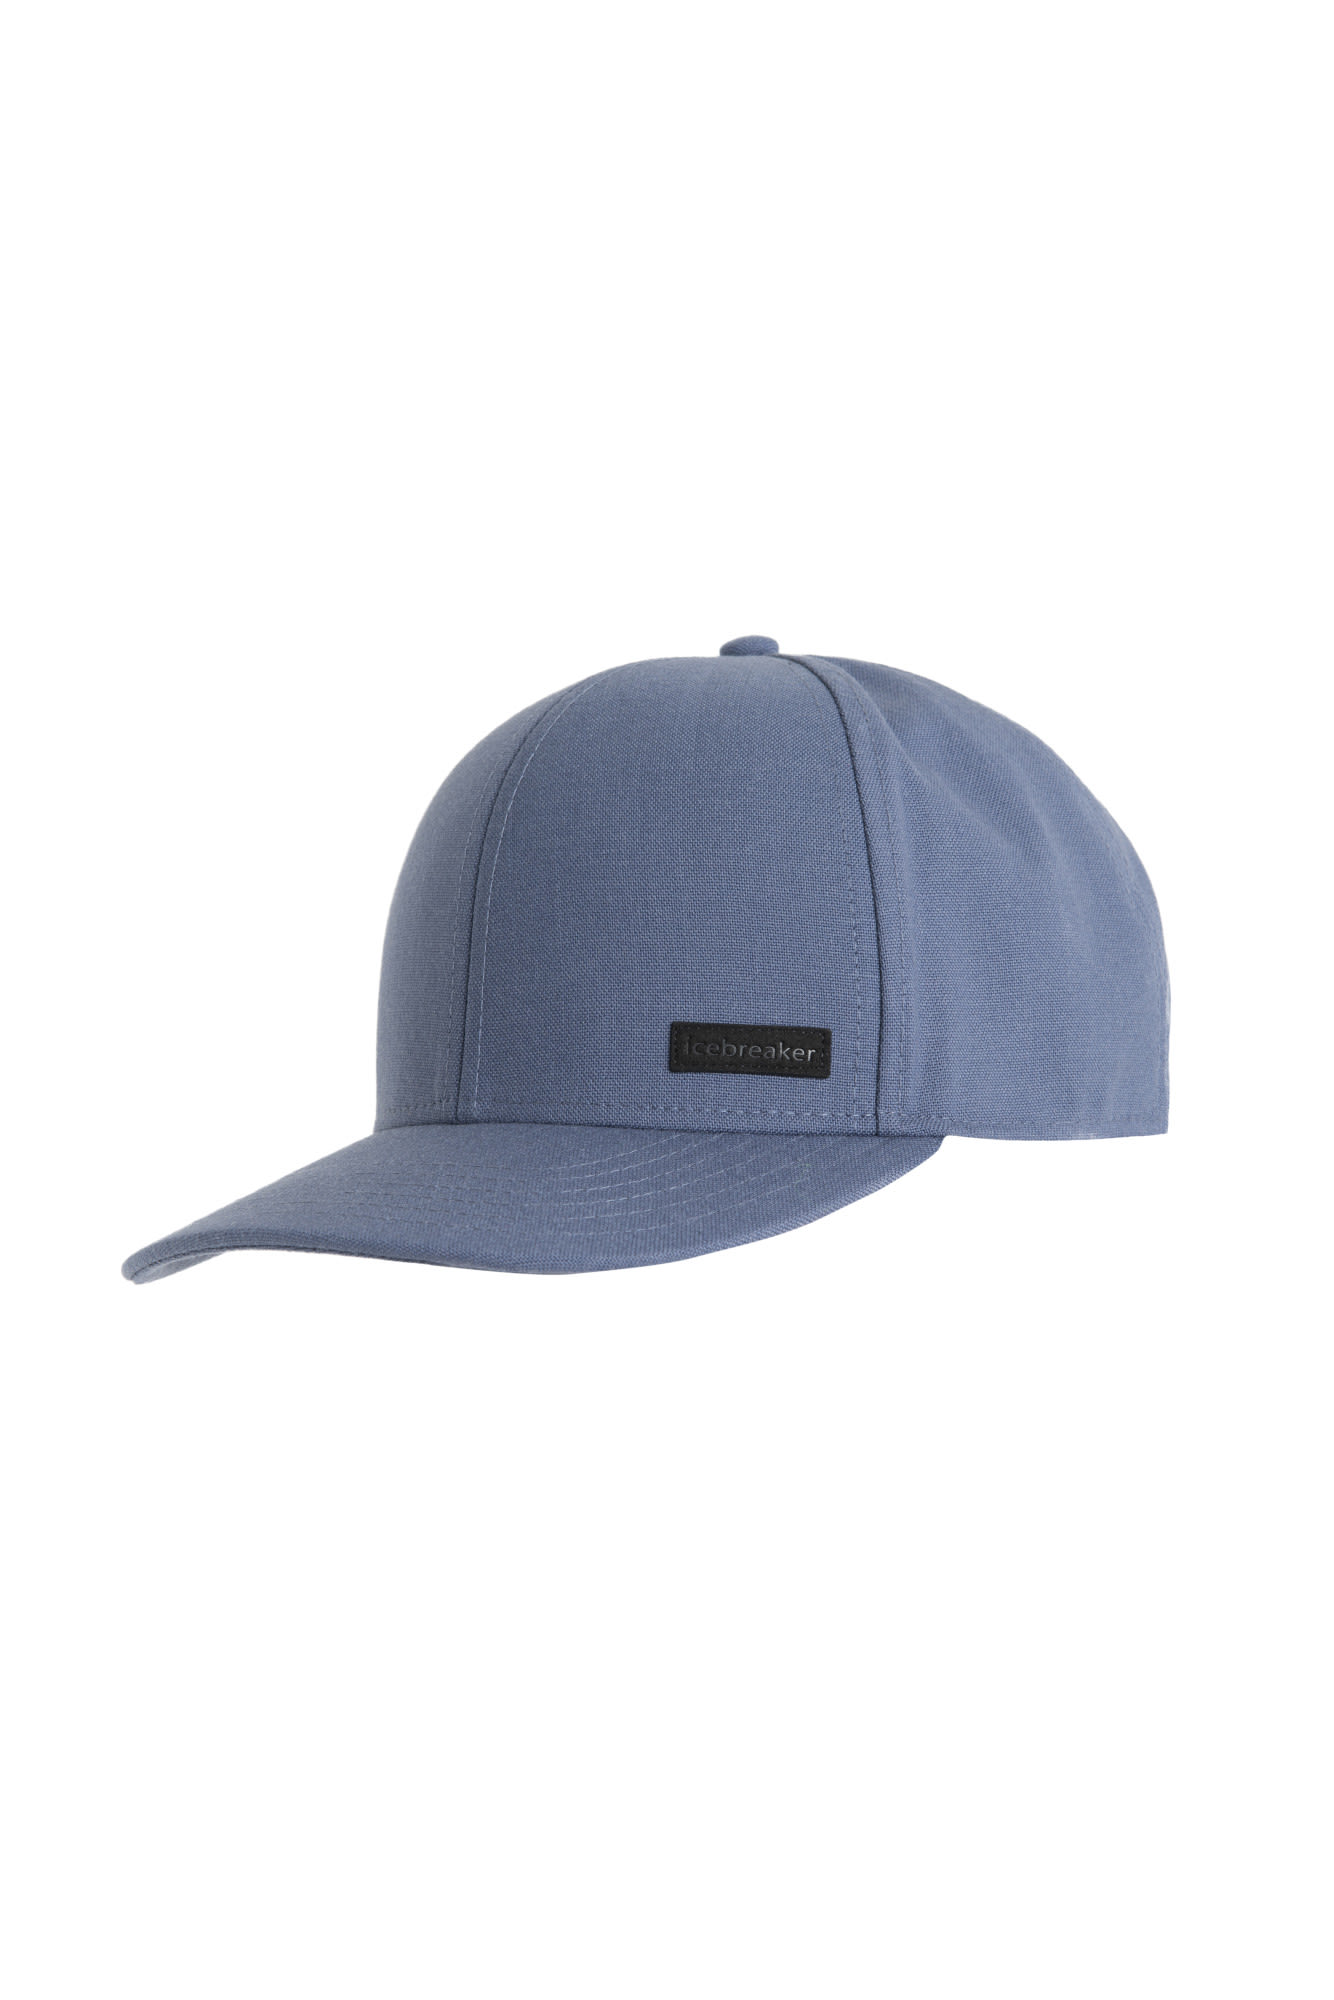 Icebreaker Patch Hat Blau | Größe One Size |  Accessoires